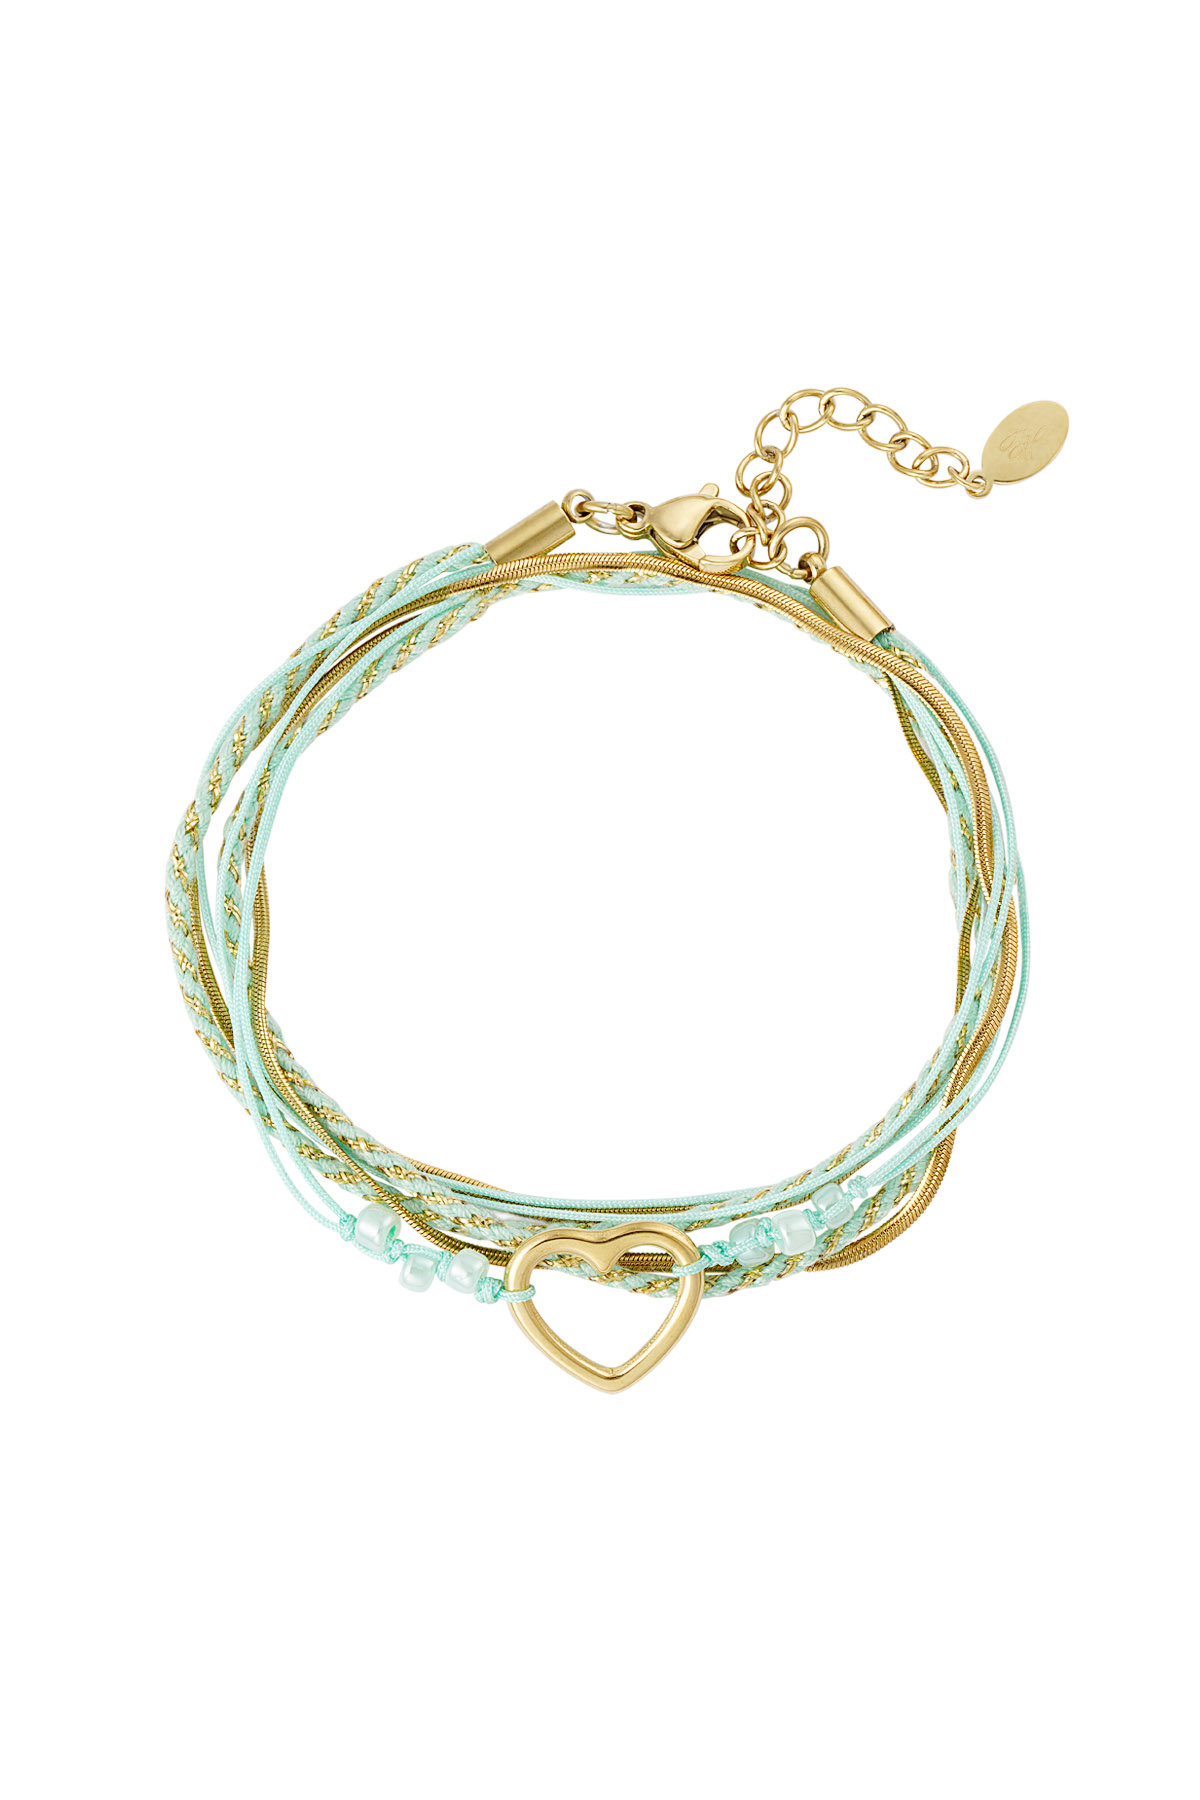 Bracelet summer flow lover - green gold h5 